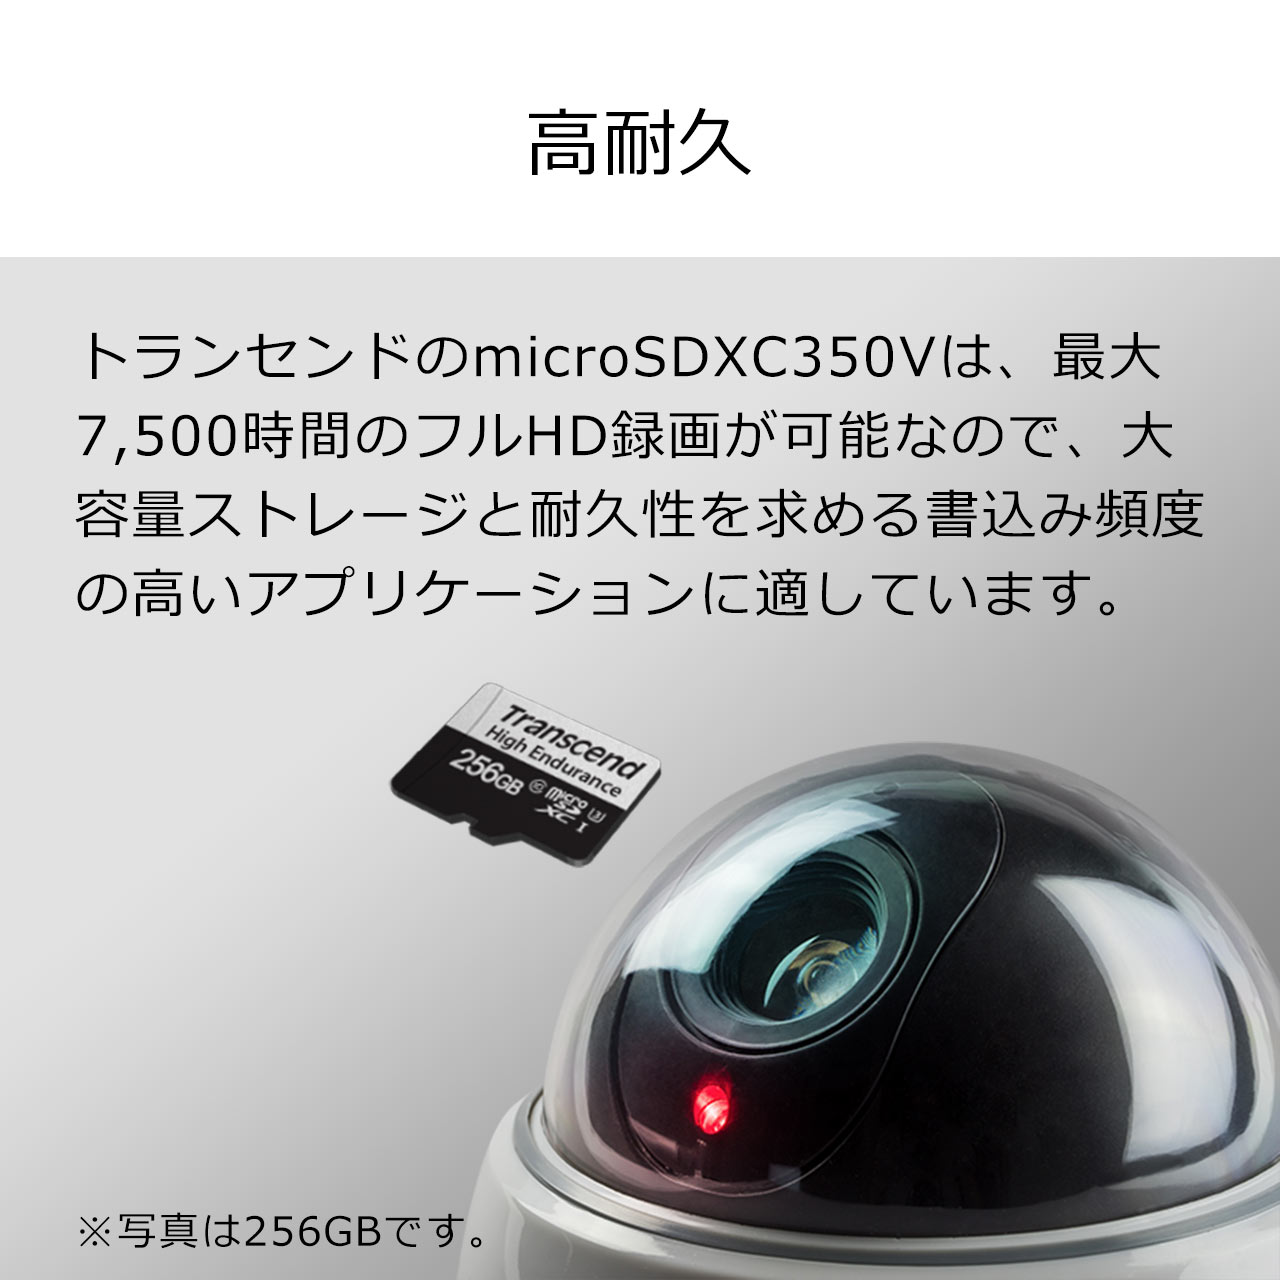 microSDHCカード 32GB Class10 UHS-I U1 高耐久 SDカード変換アダプタ付き Nintendo Switch対応 Transcend製 TS32GUSD350V